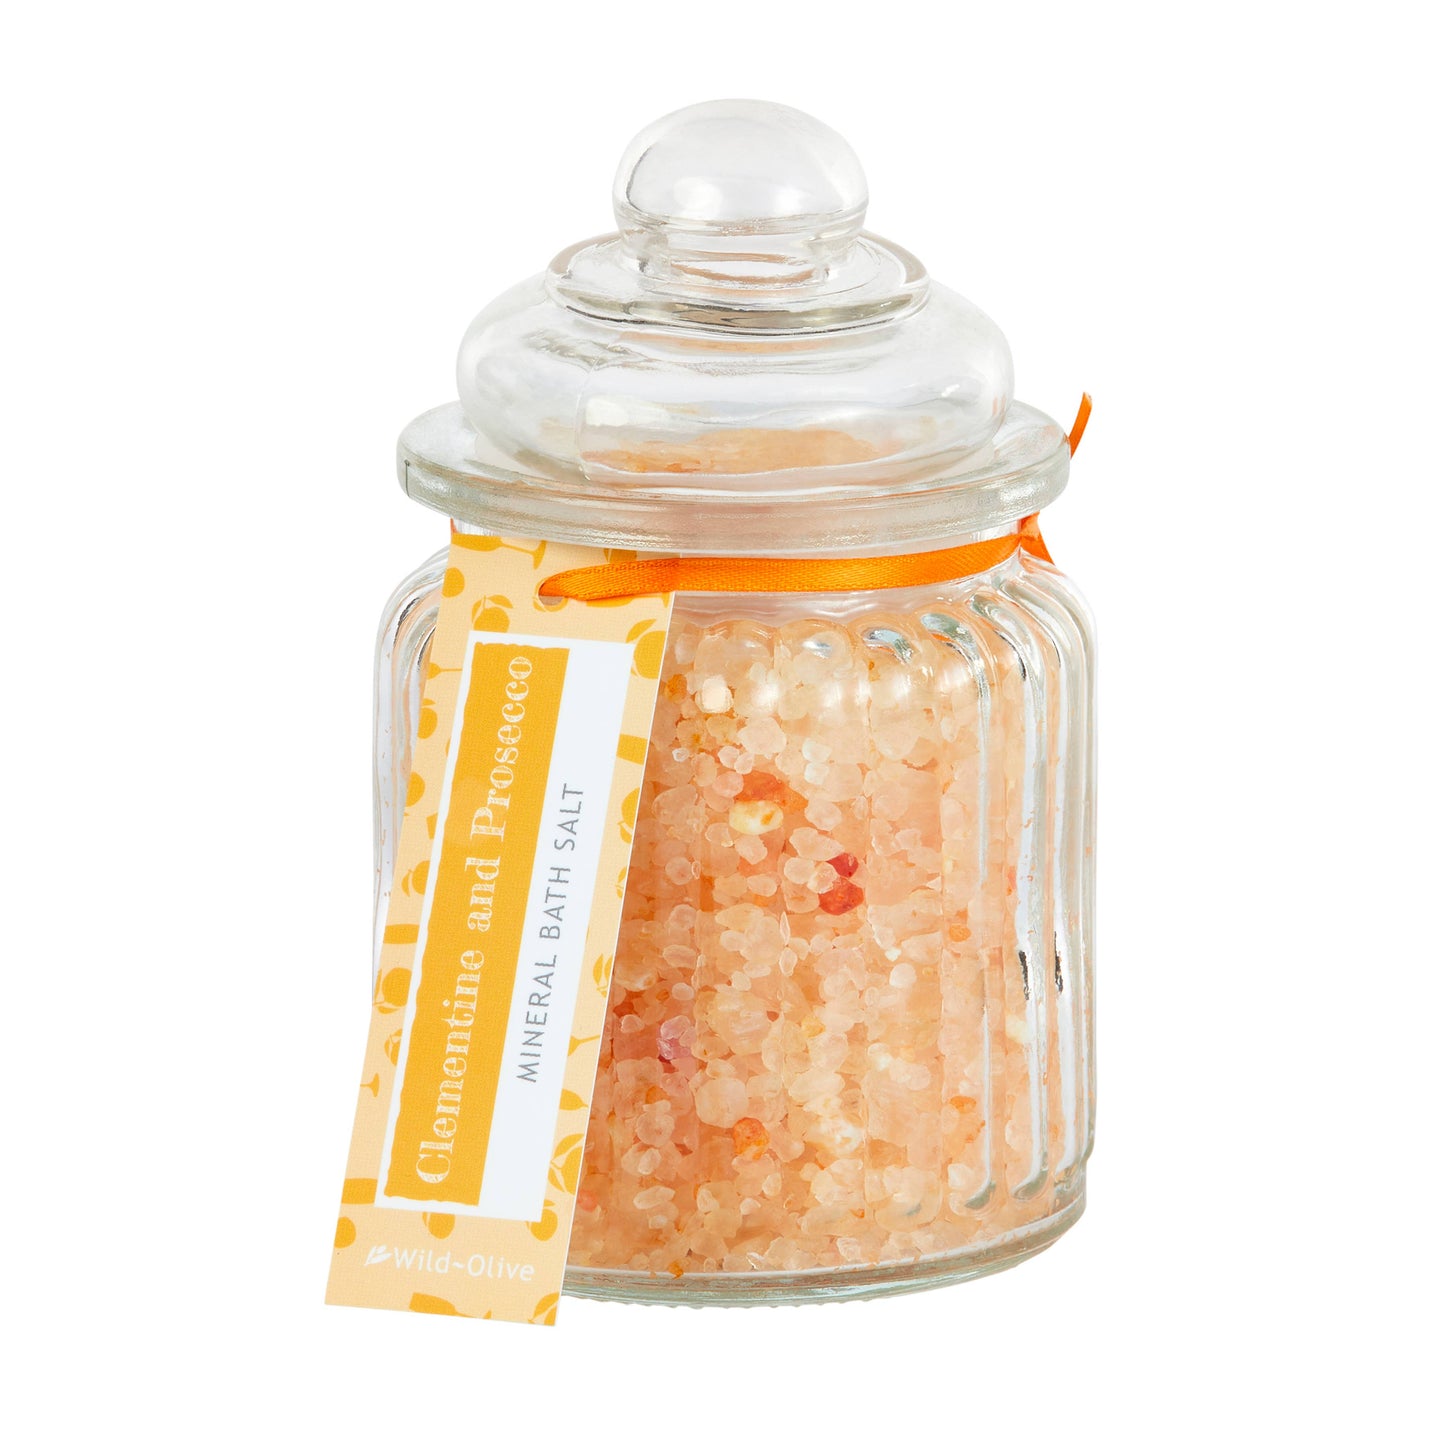 Clementine Mimosa Bath Salt Jar